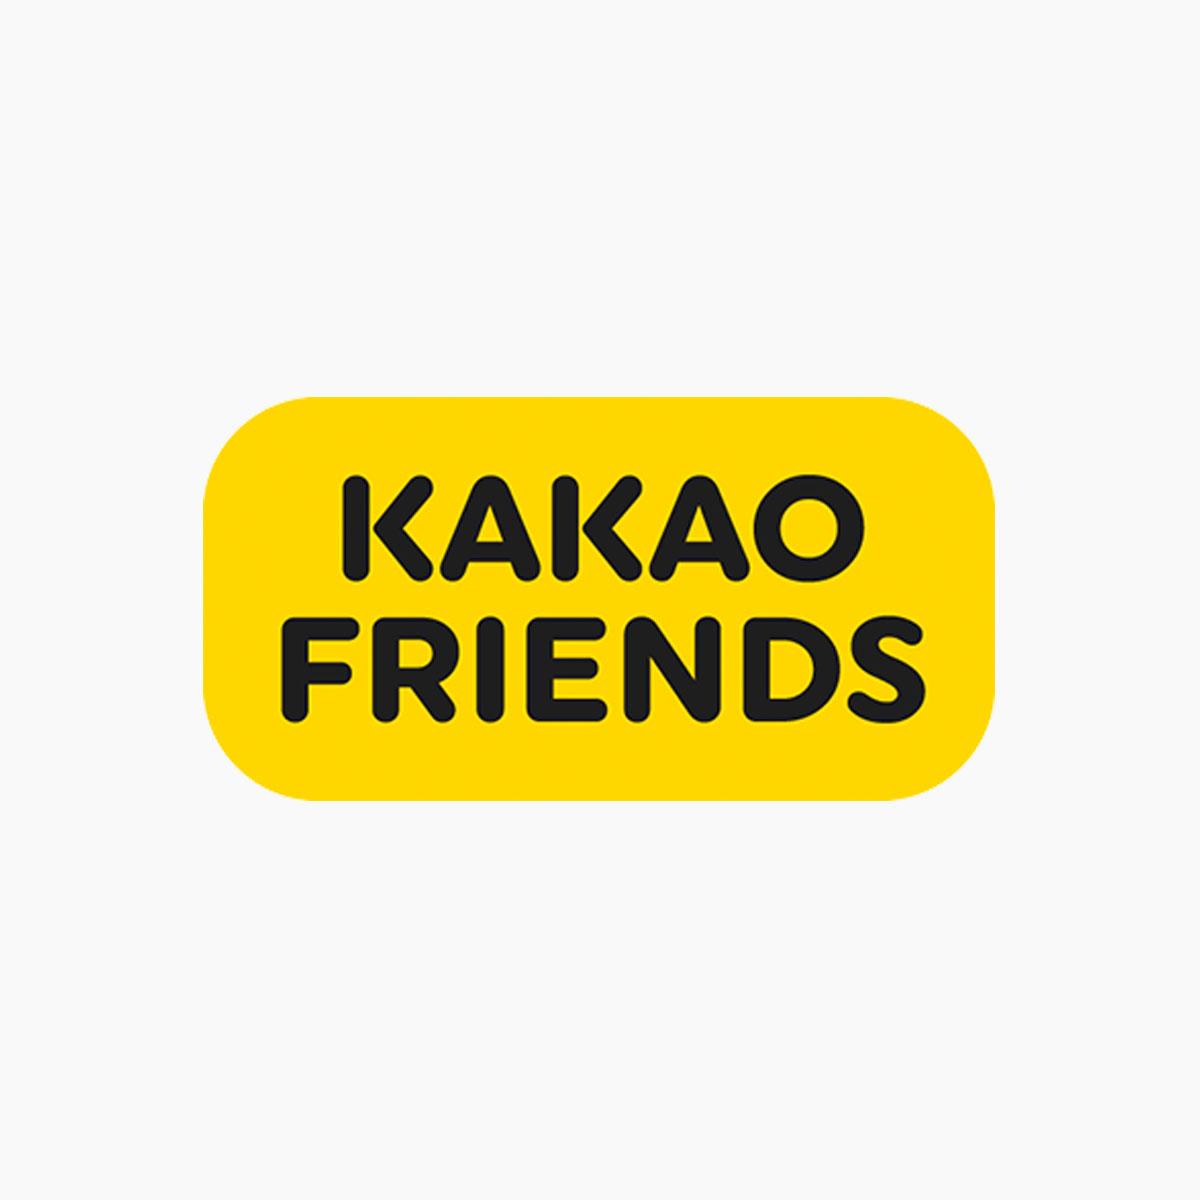 KAKAO-logo-image